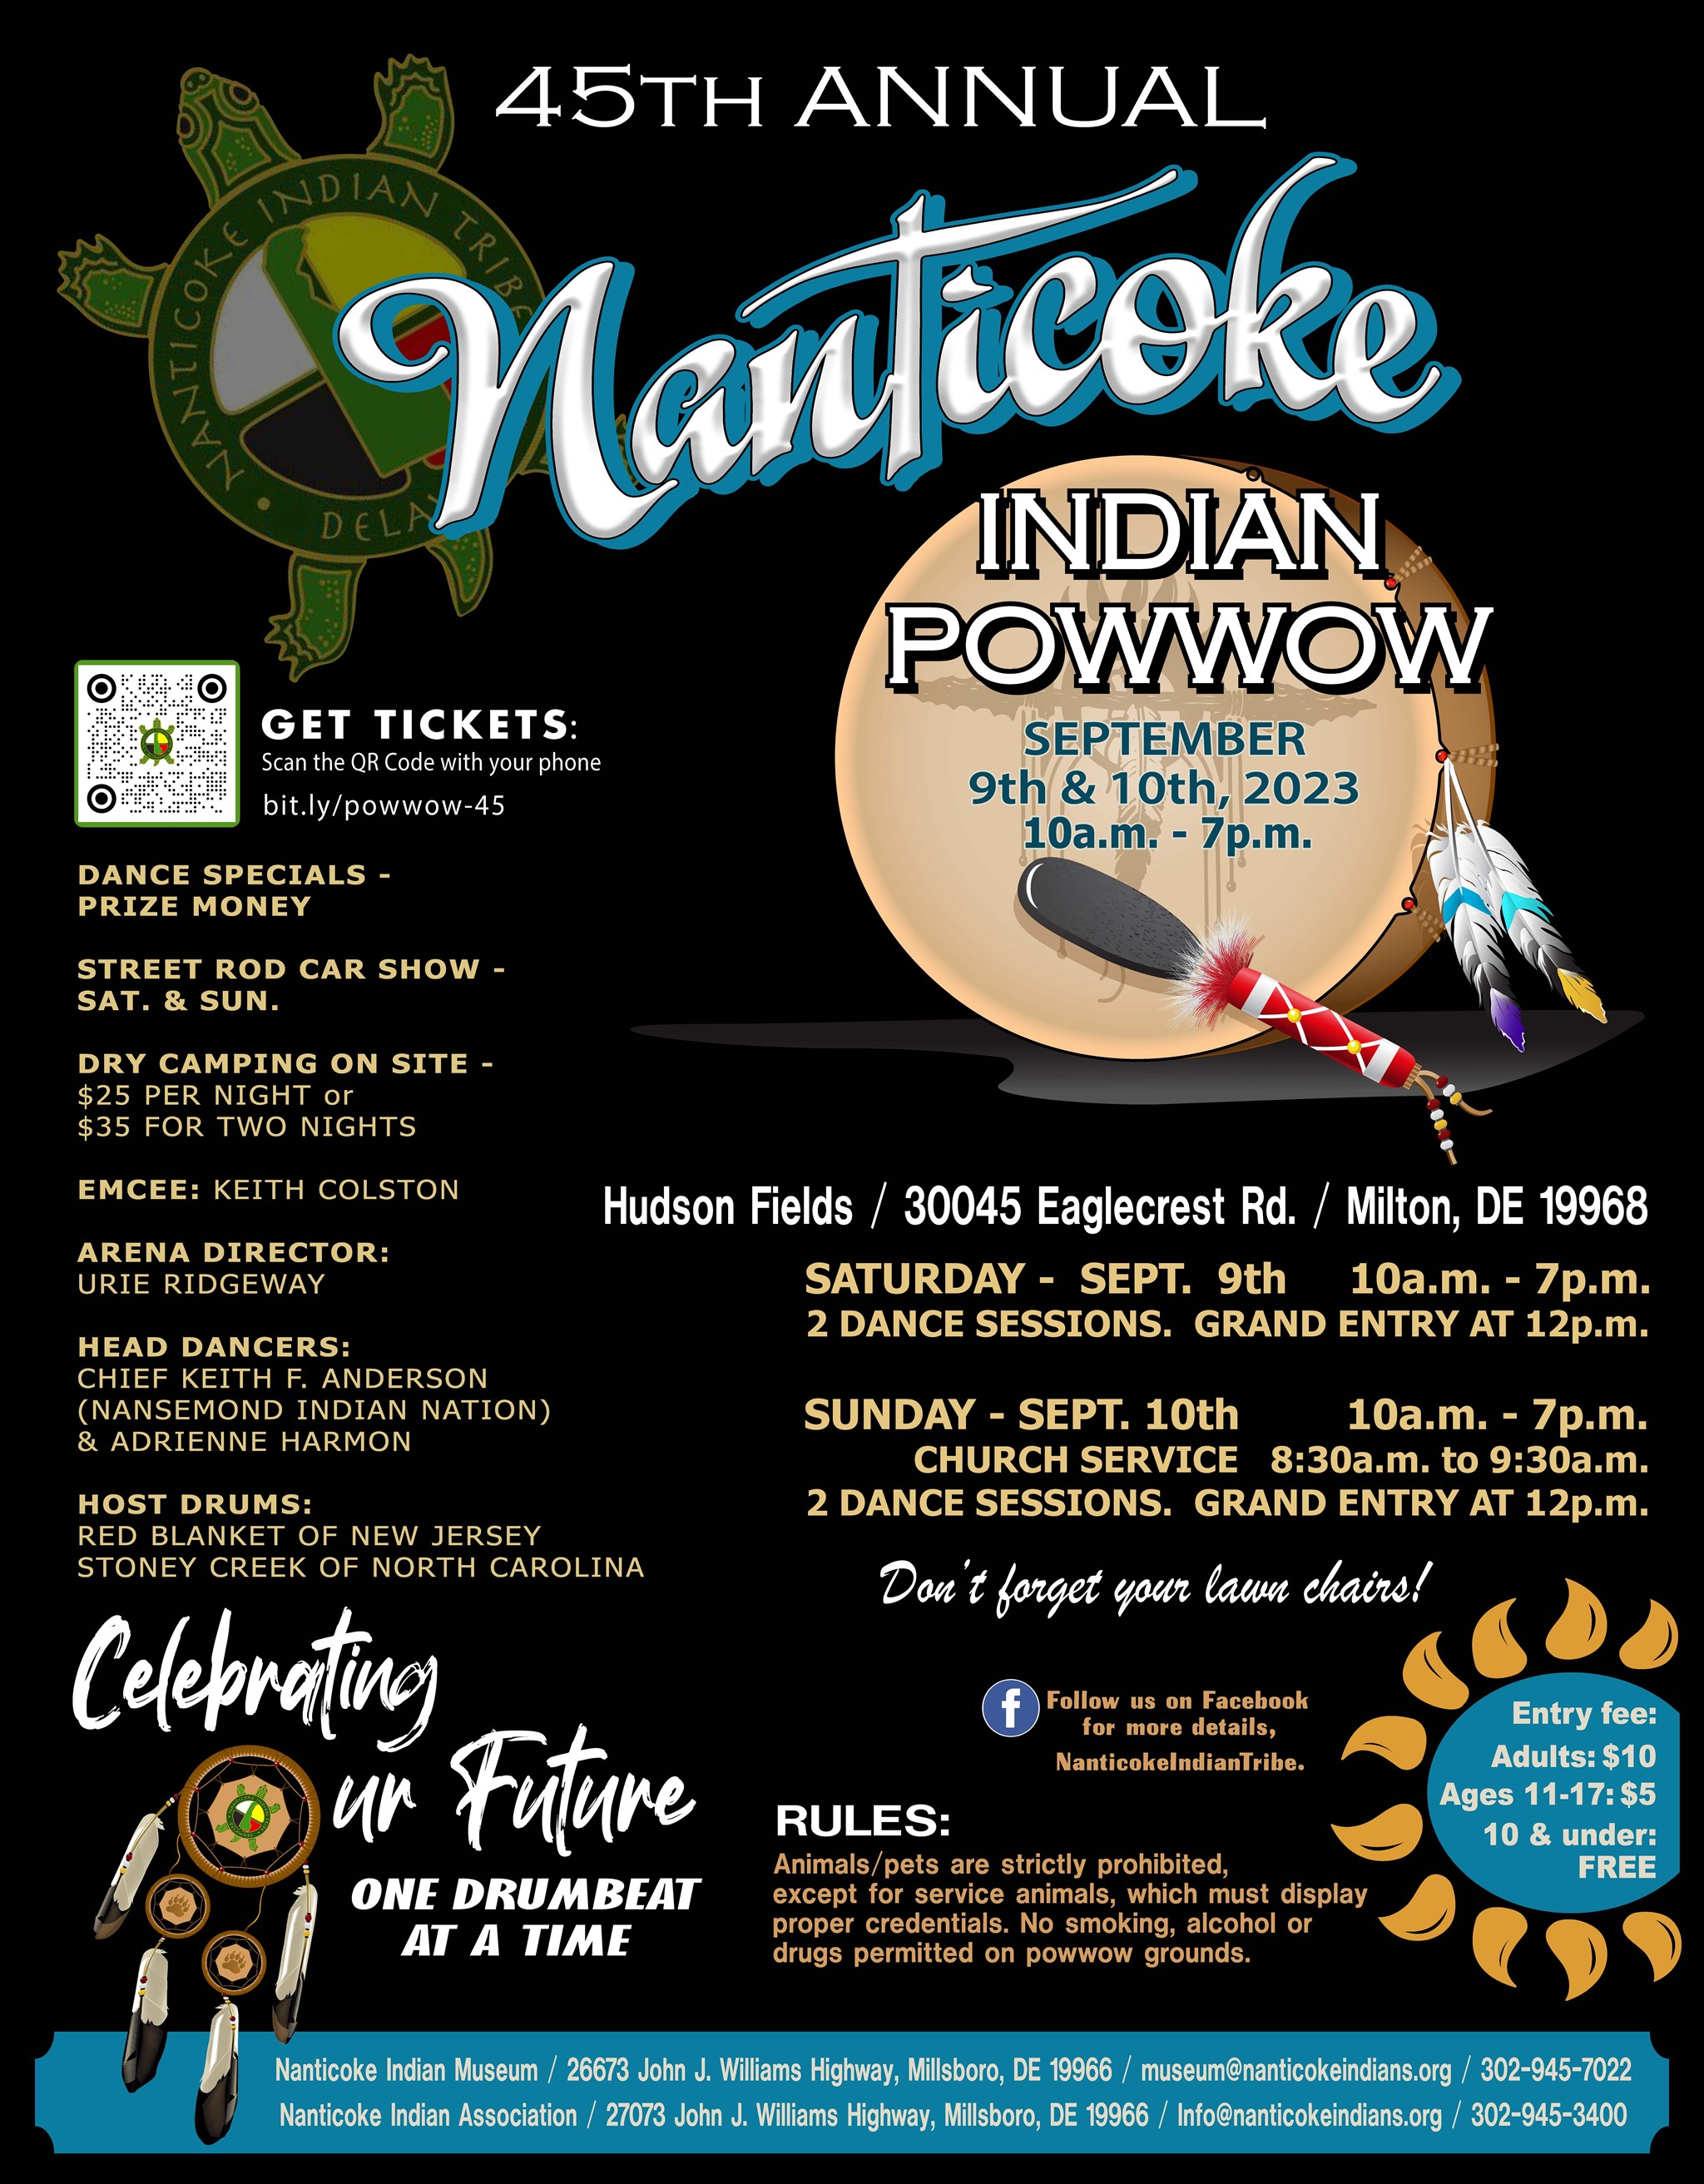 45th Annual Nanticoke Indian Powwow